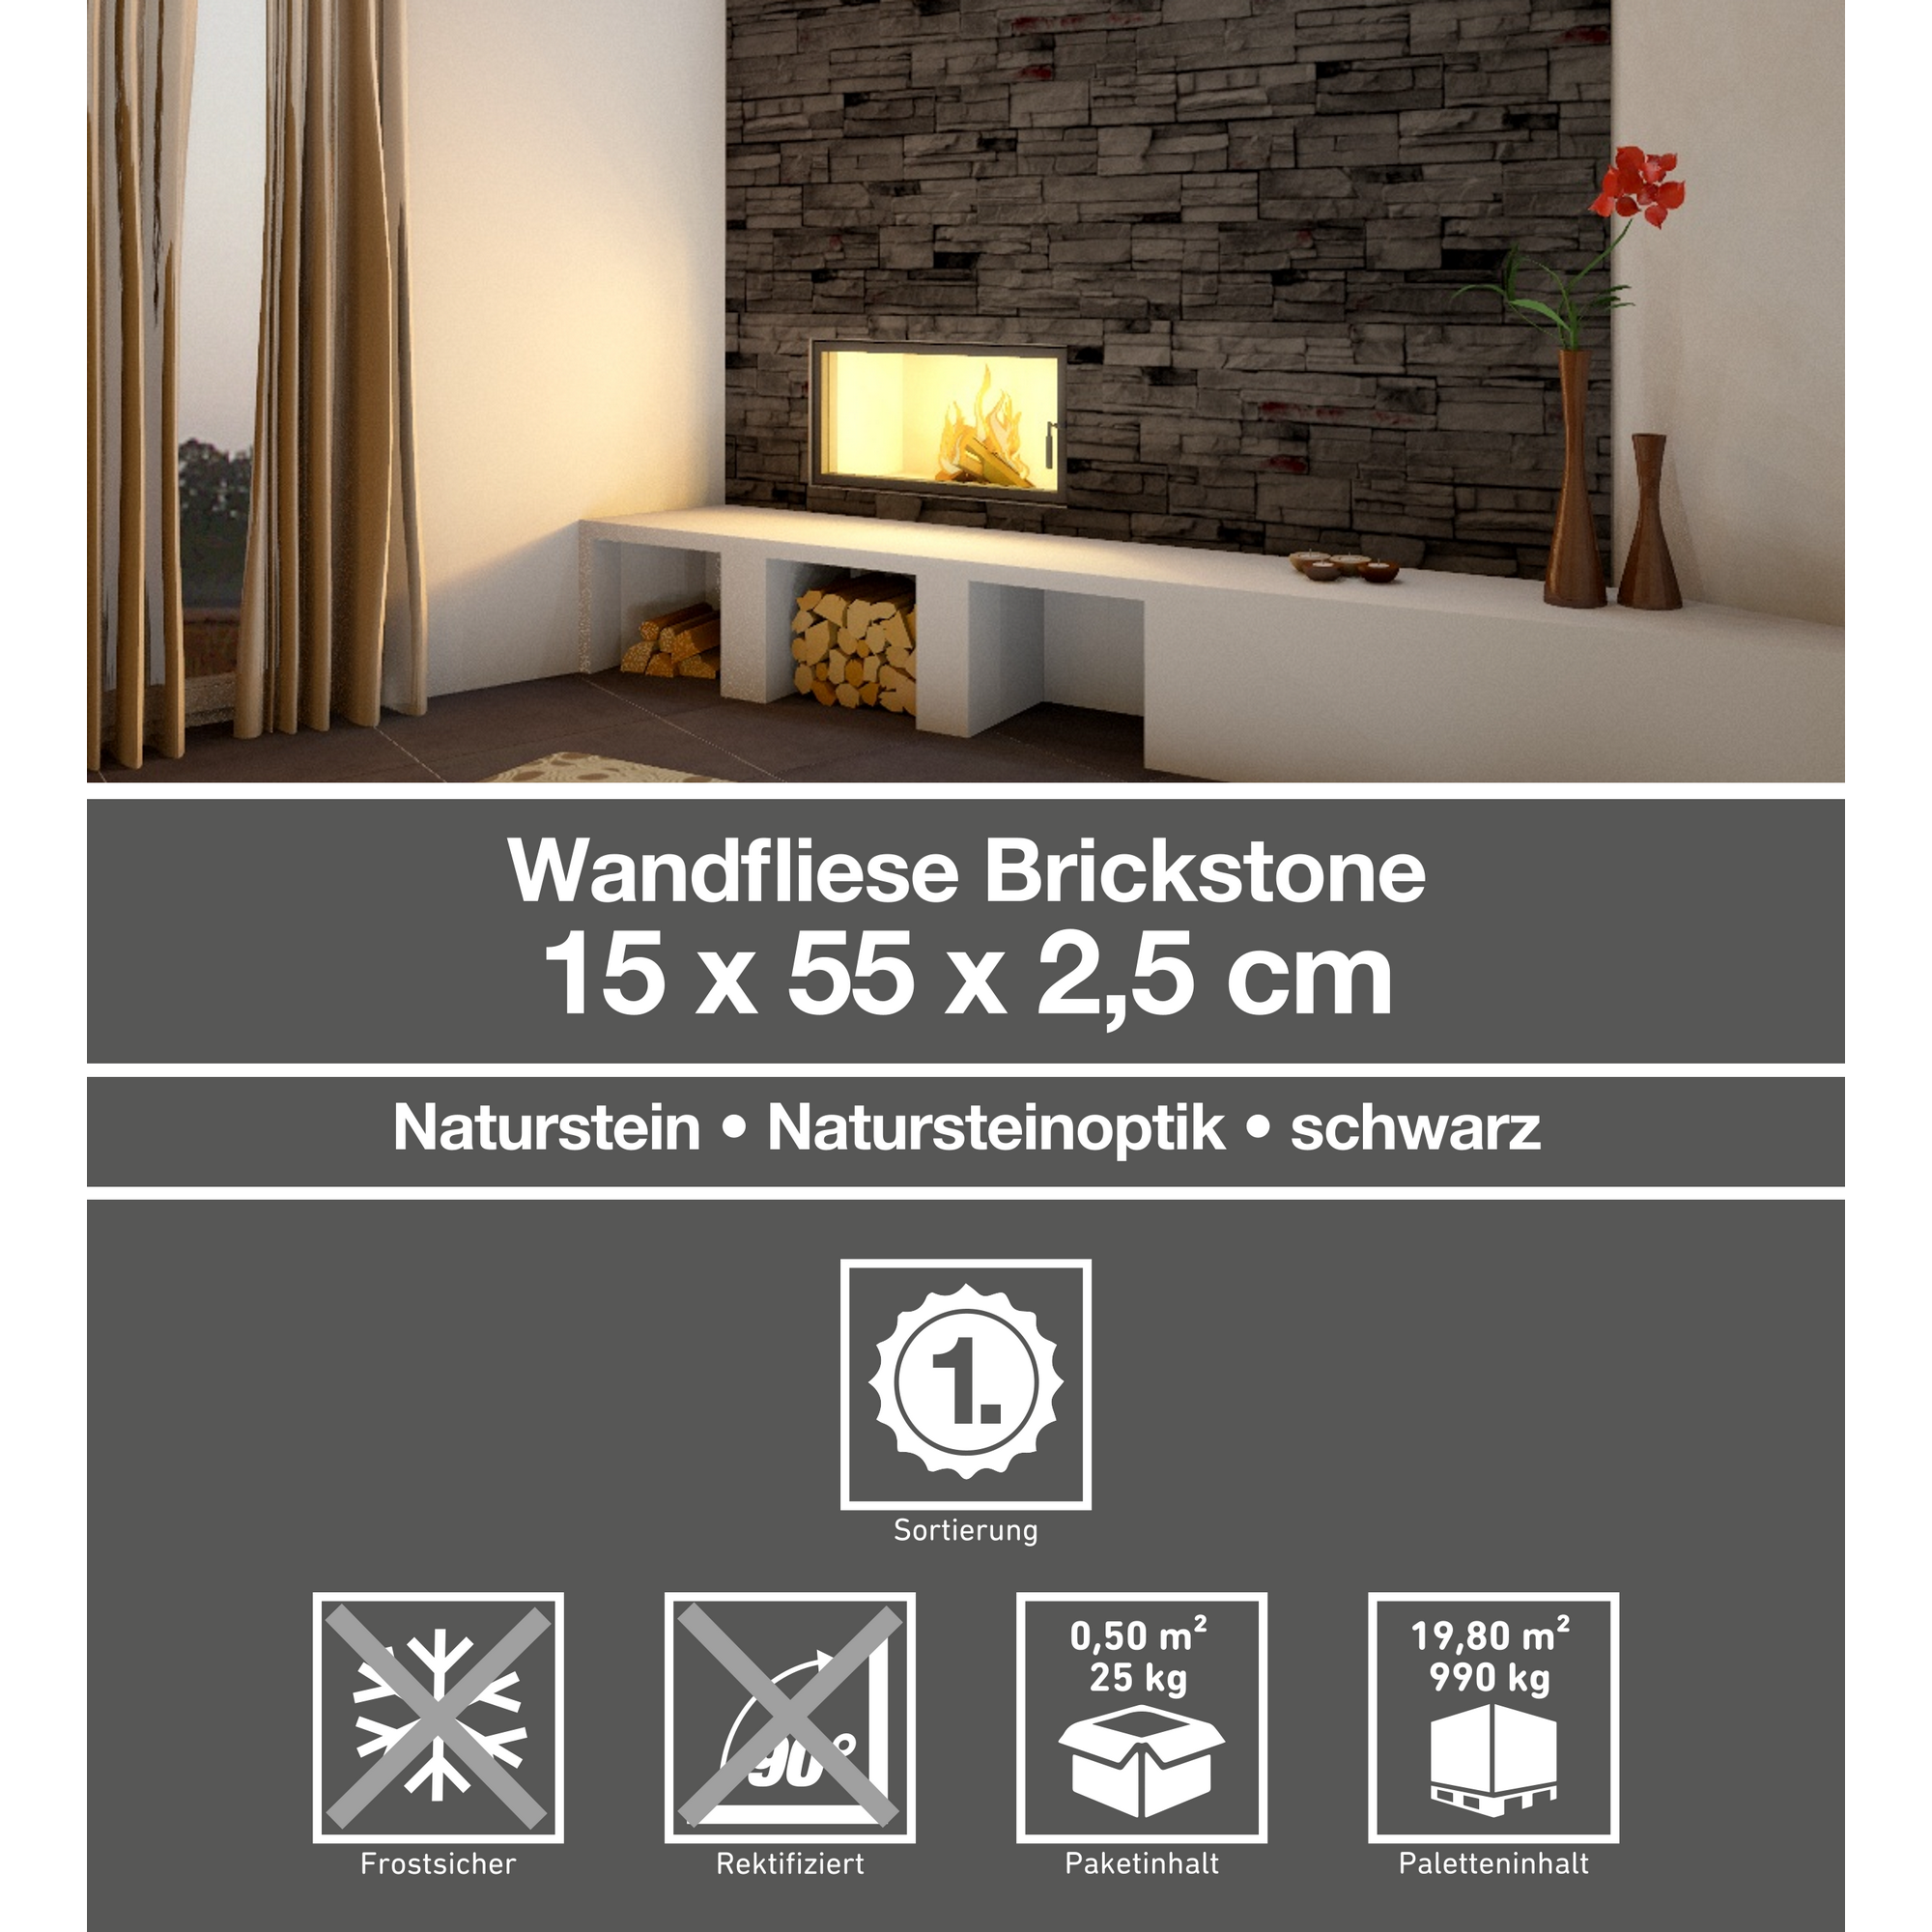 Wandfliese Brickstone schiefer nero 15x55cm + product picture